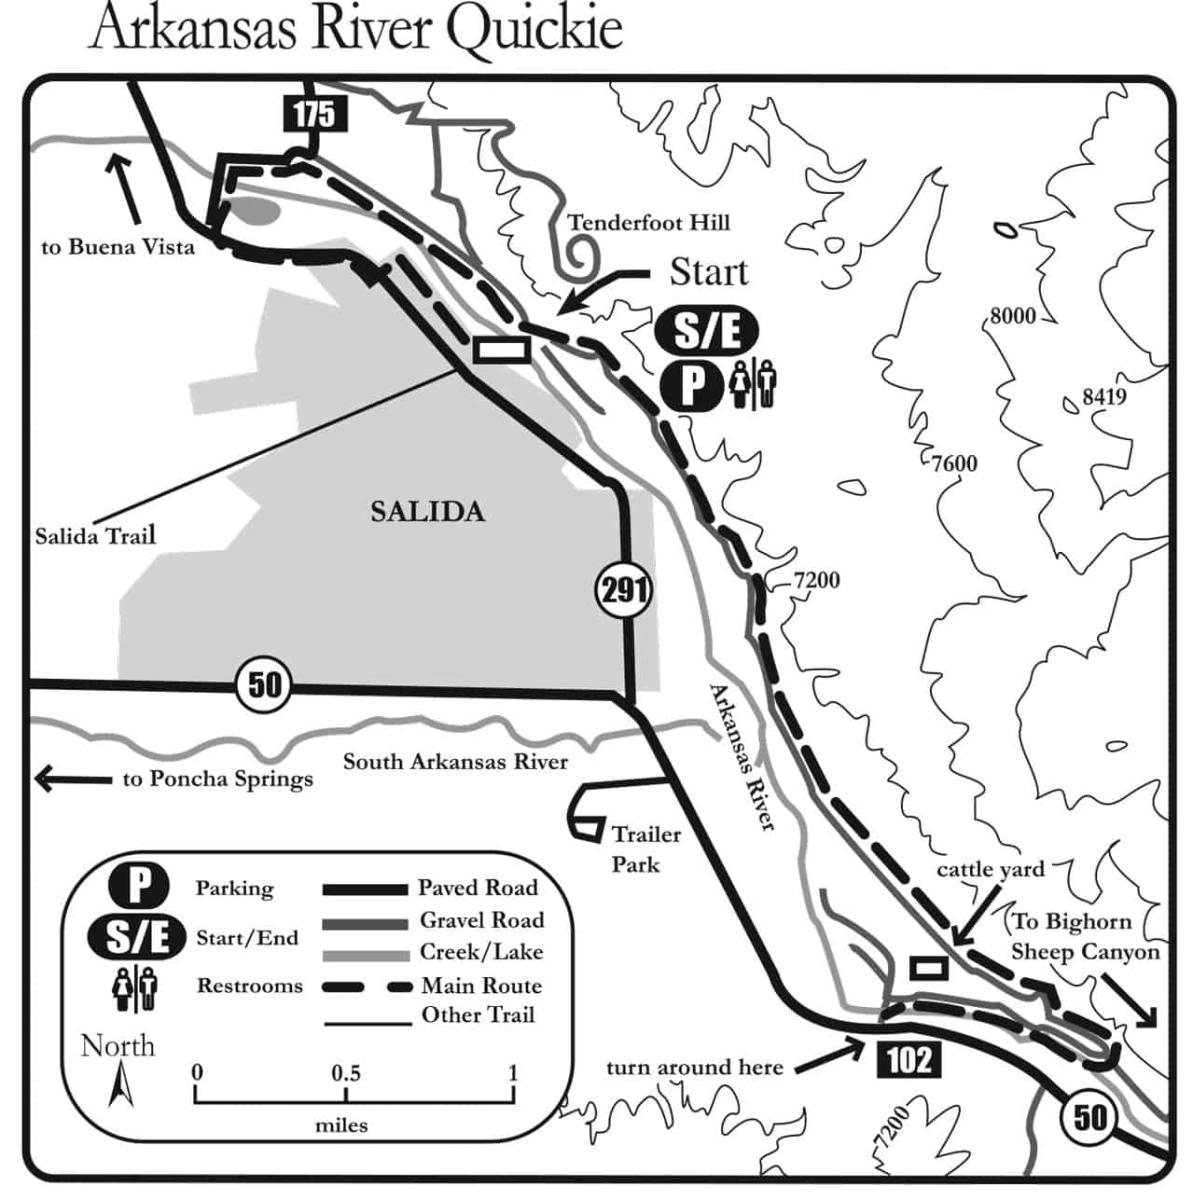 Arkansas-River-Quickie-map